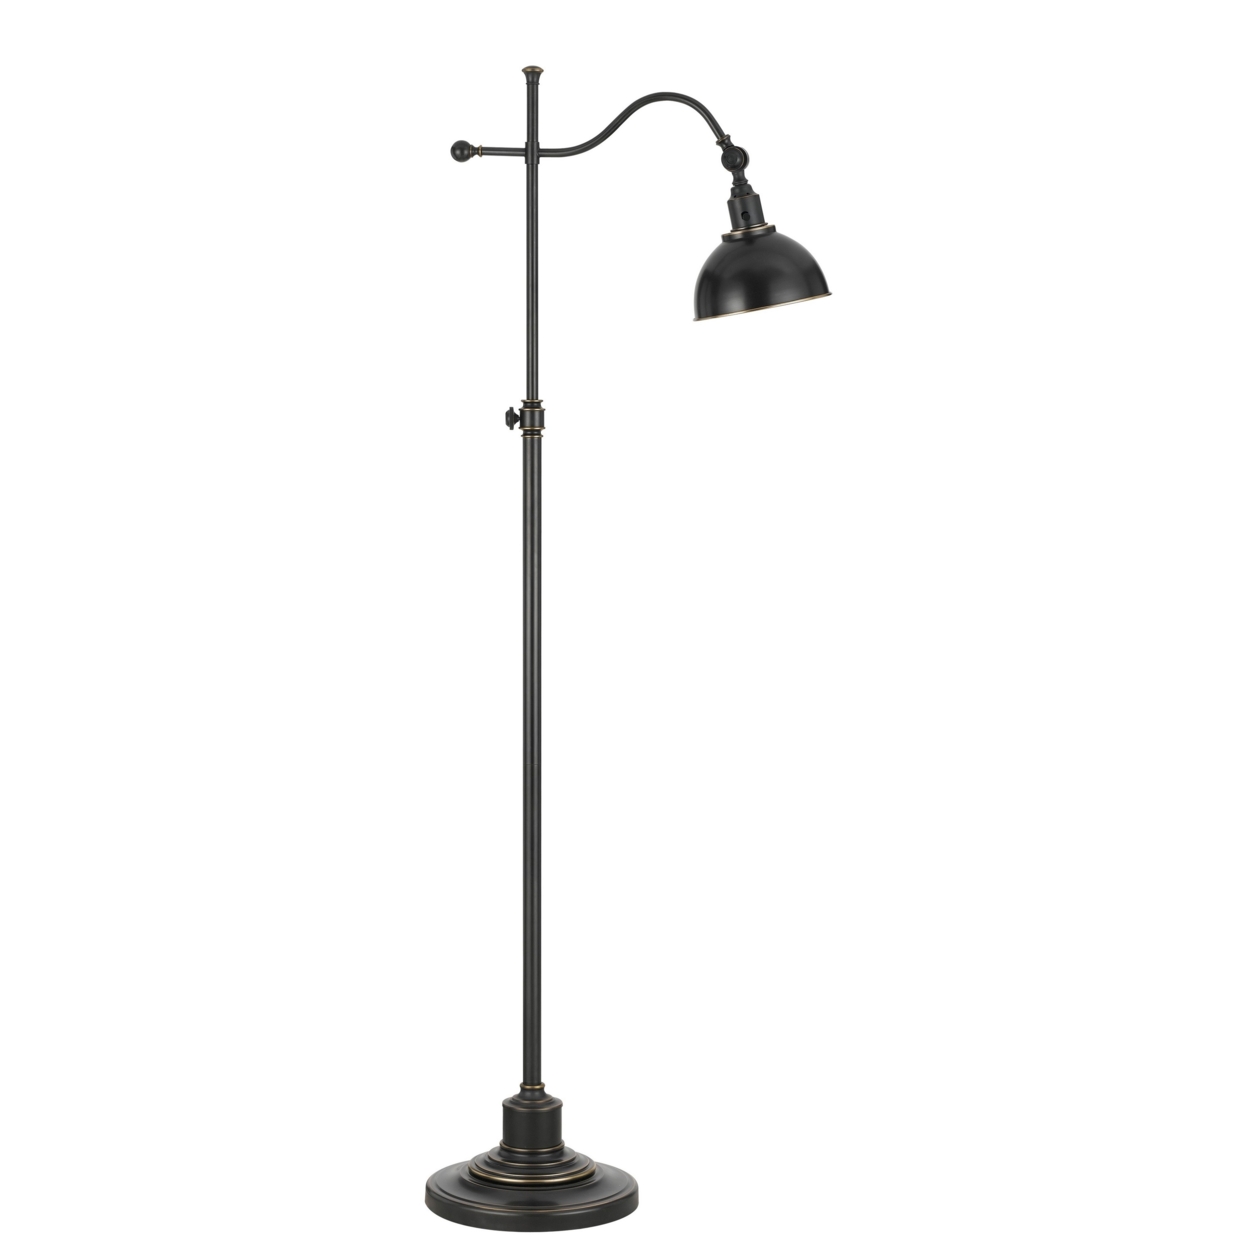 60 Watt Metal Lamp With Adjustable Pole And Bowl Shade, Black- Saltoro Sherpi